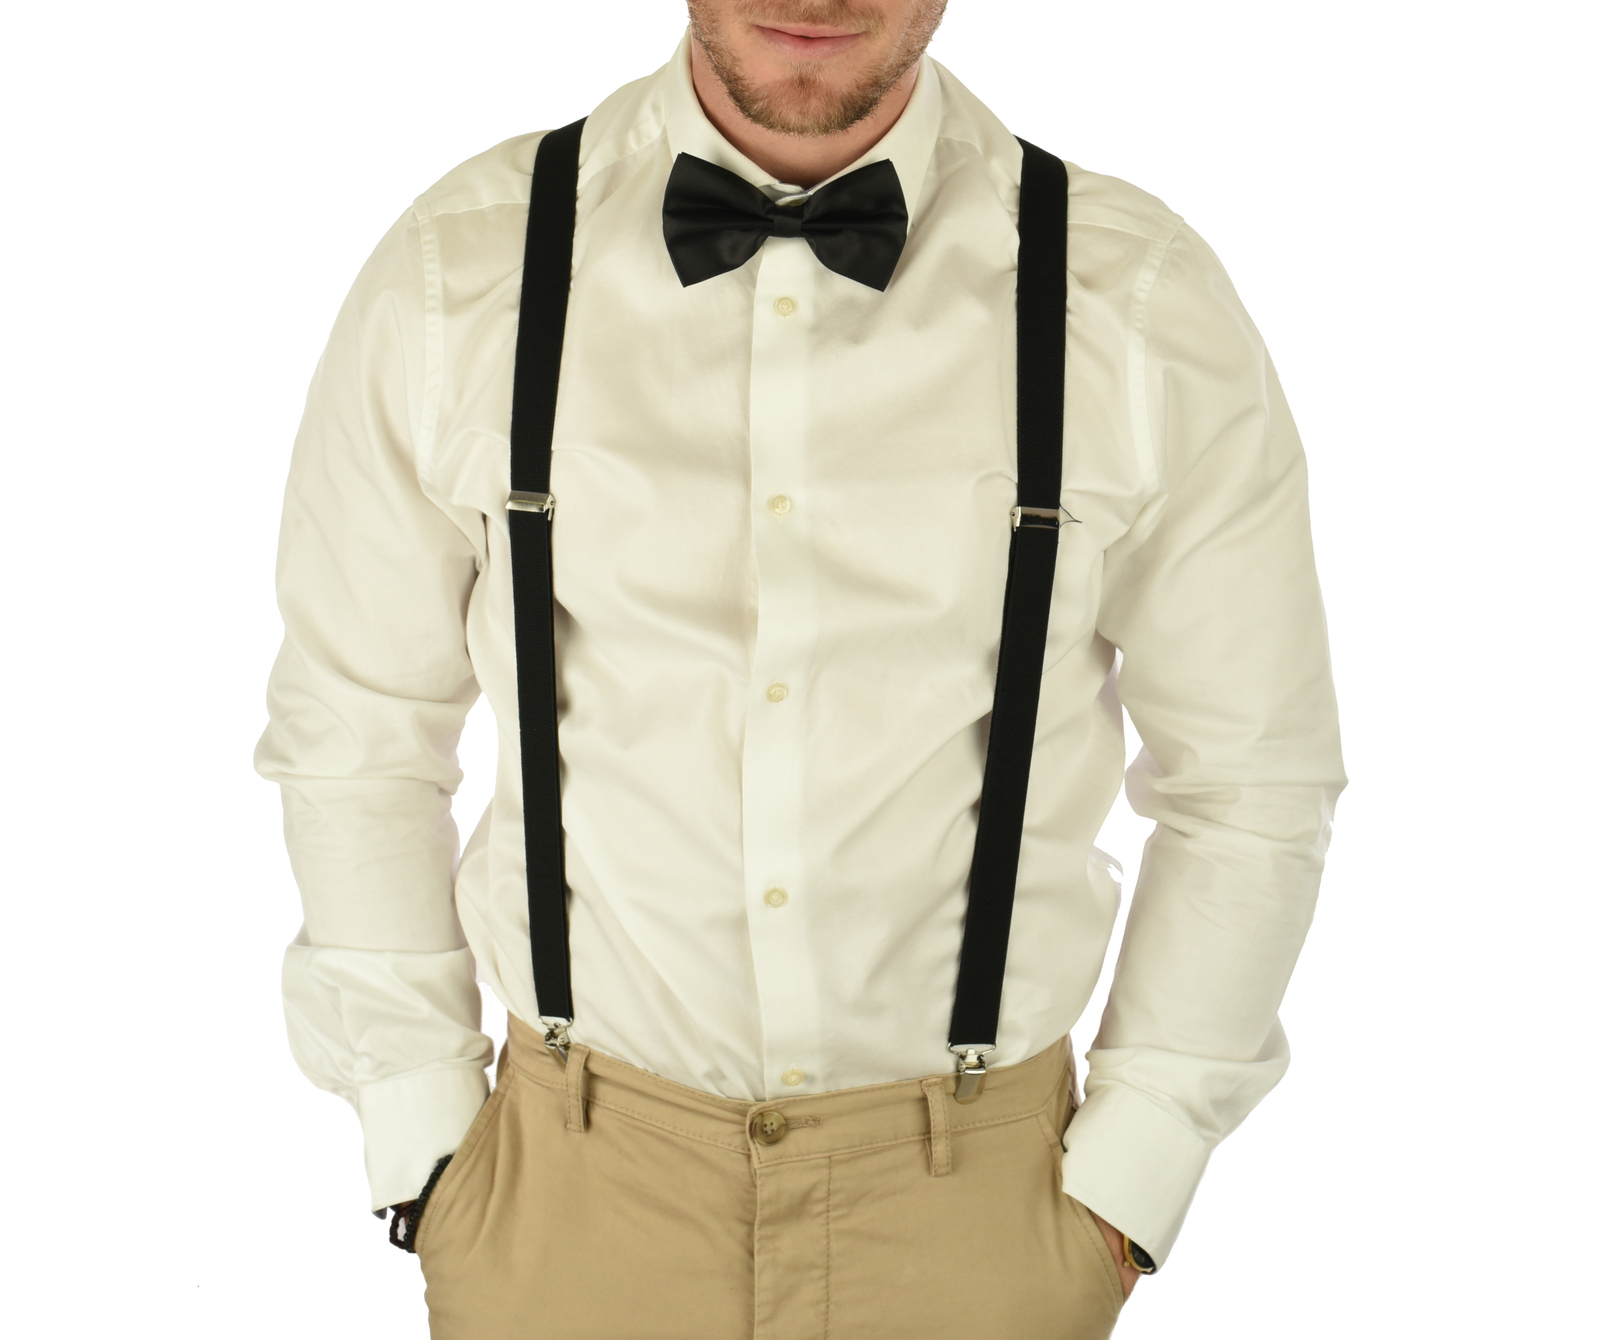 Accessories Belts & Braces Suspenders Rubber Ducky Bow Tie & Suspenders 